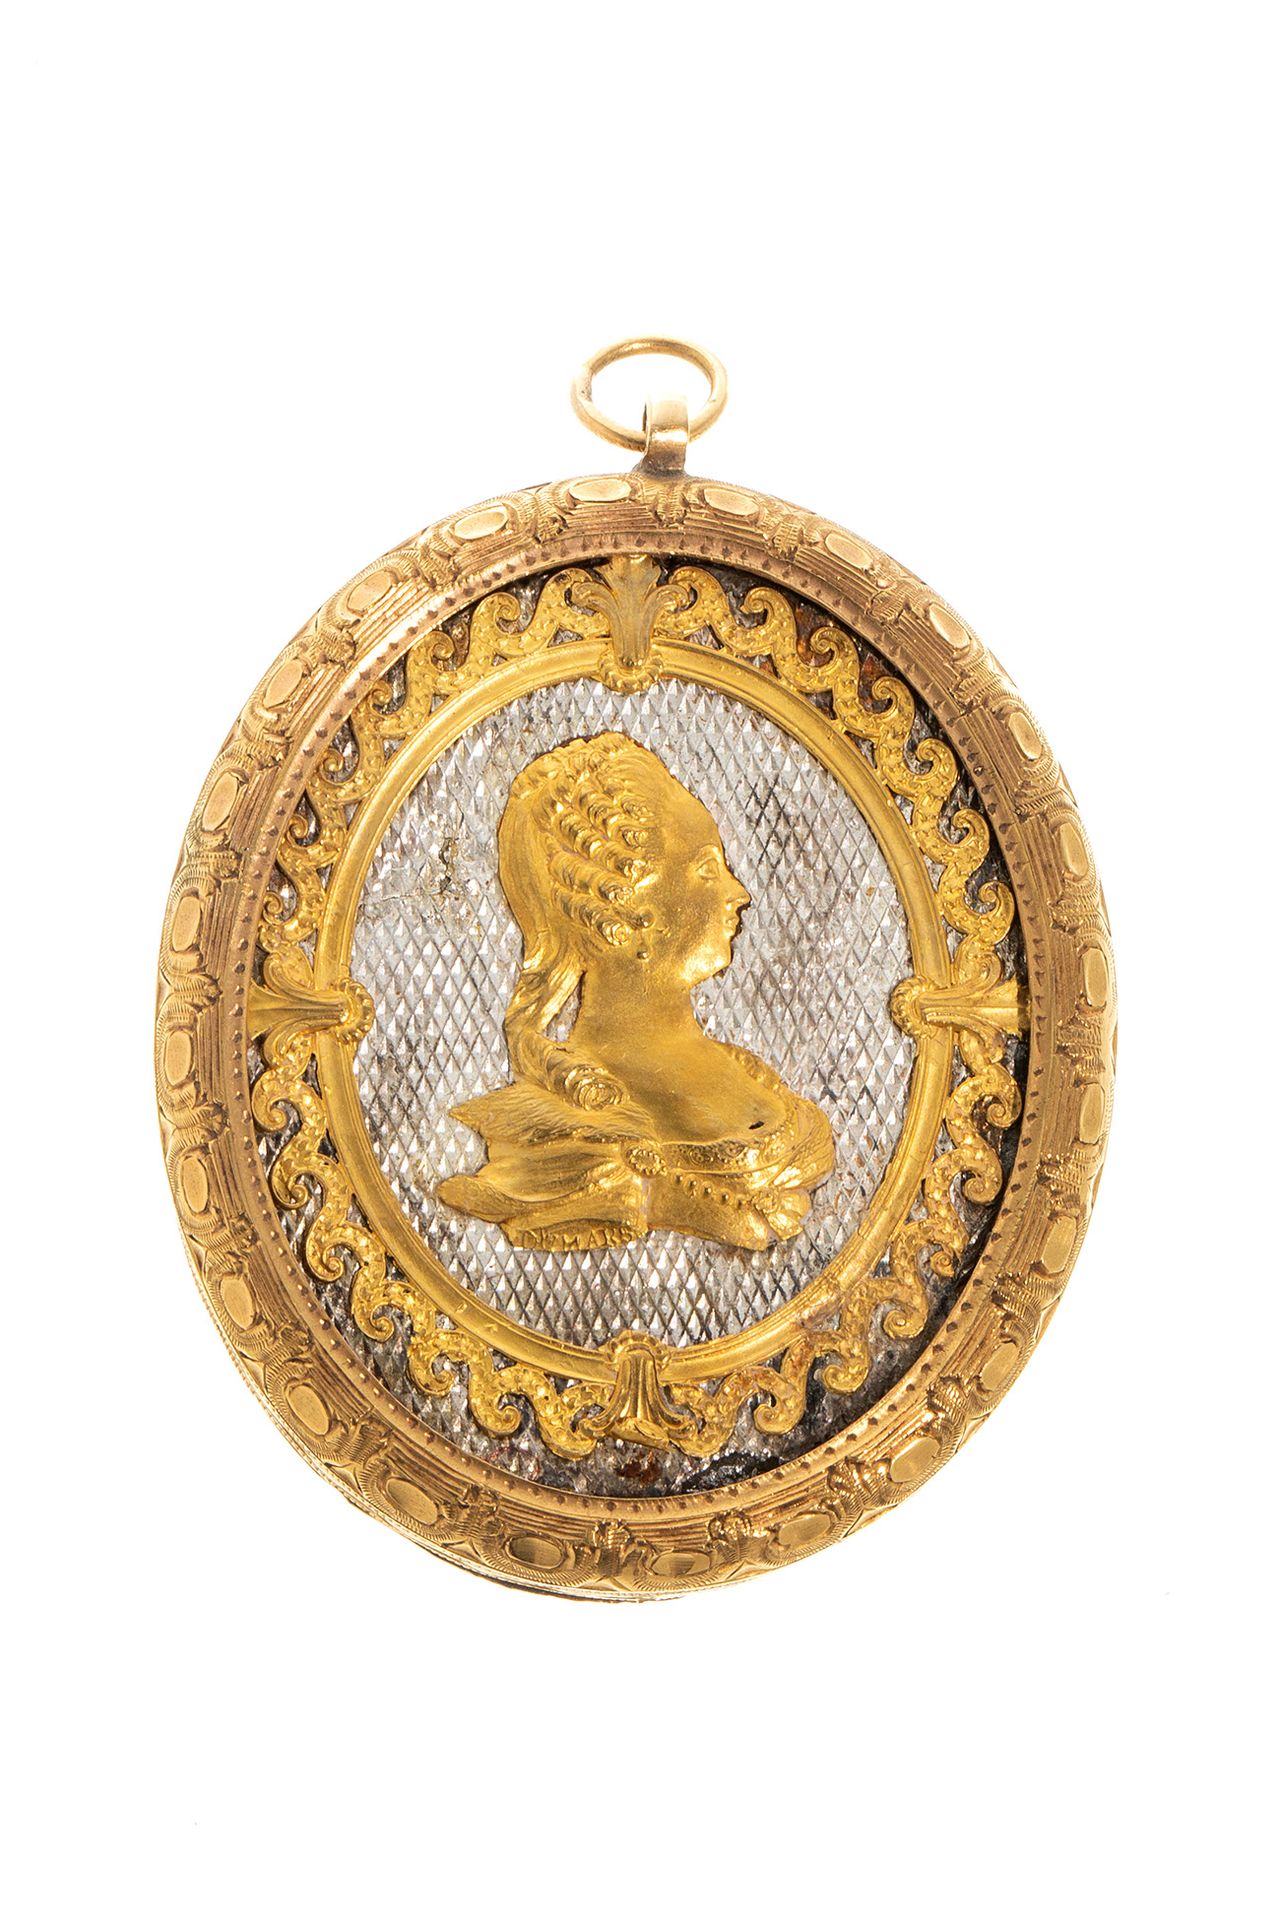 18kt gold cameo medallion pendant. 18K金浮雕奖章吊坠。
浮雕描绘了一个具有十八世纪服装和美学的女性形象。
框架绘制了古典图&hellip;